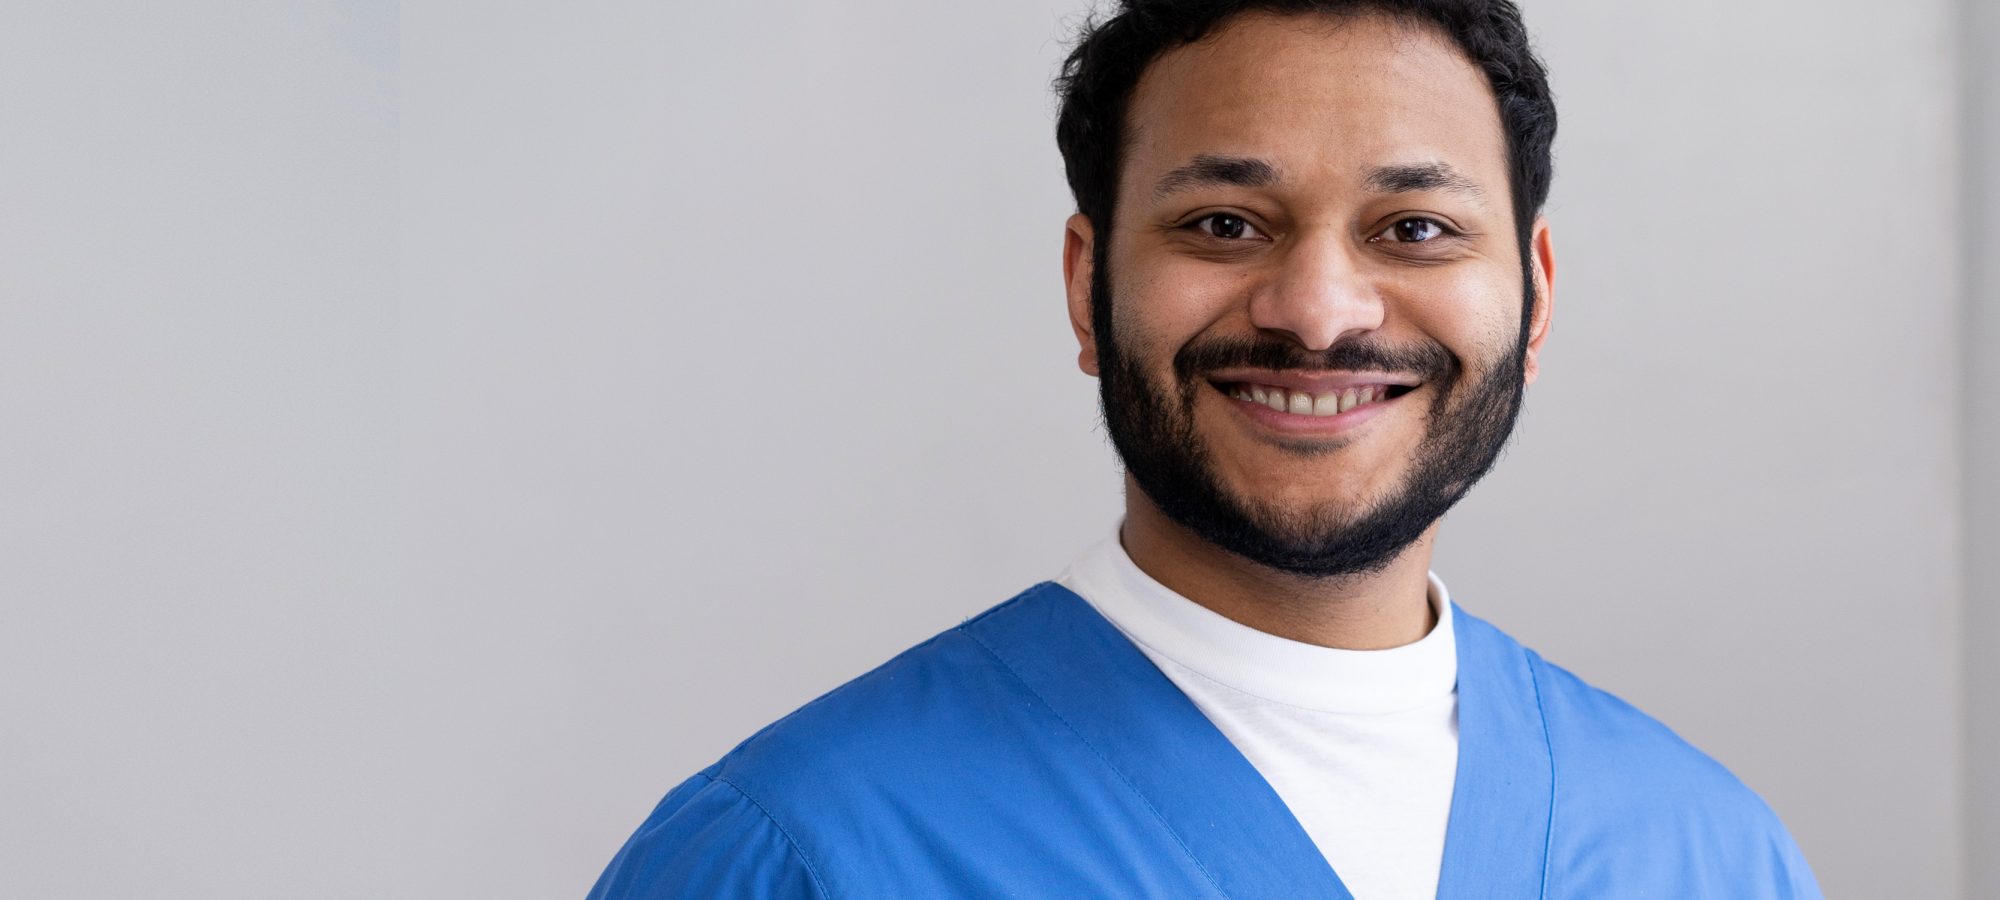 Healthcareworker in scrubs smiling at camera